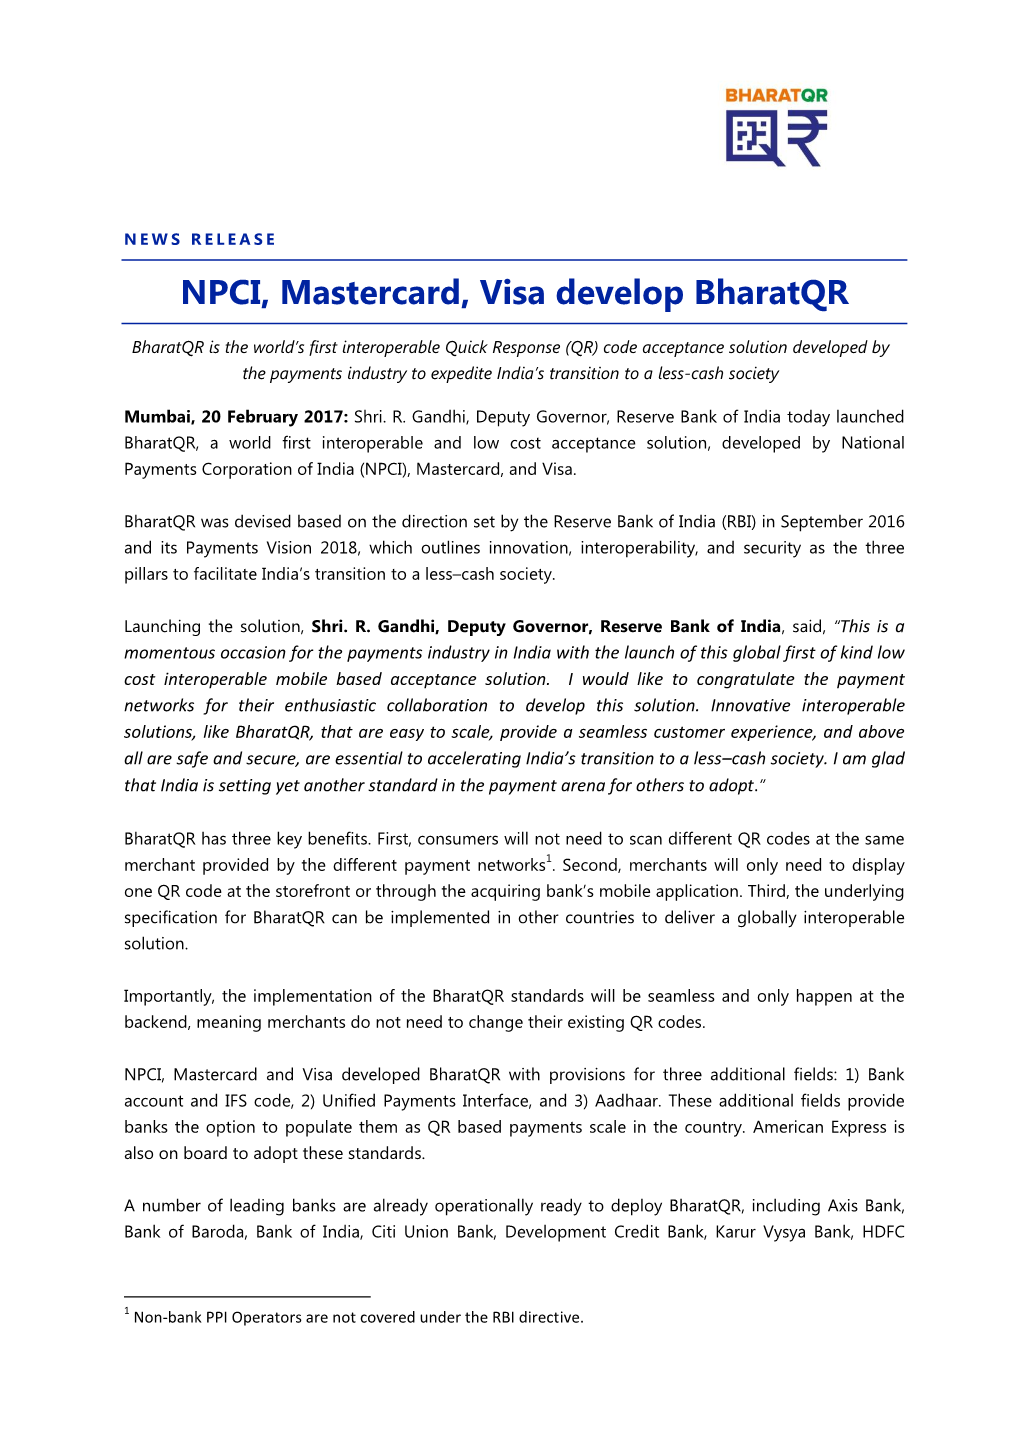 NPCI, Mastercard, Visa Develop Bharatqr